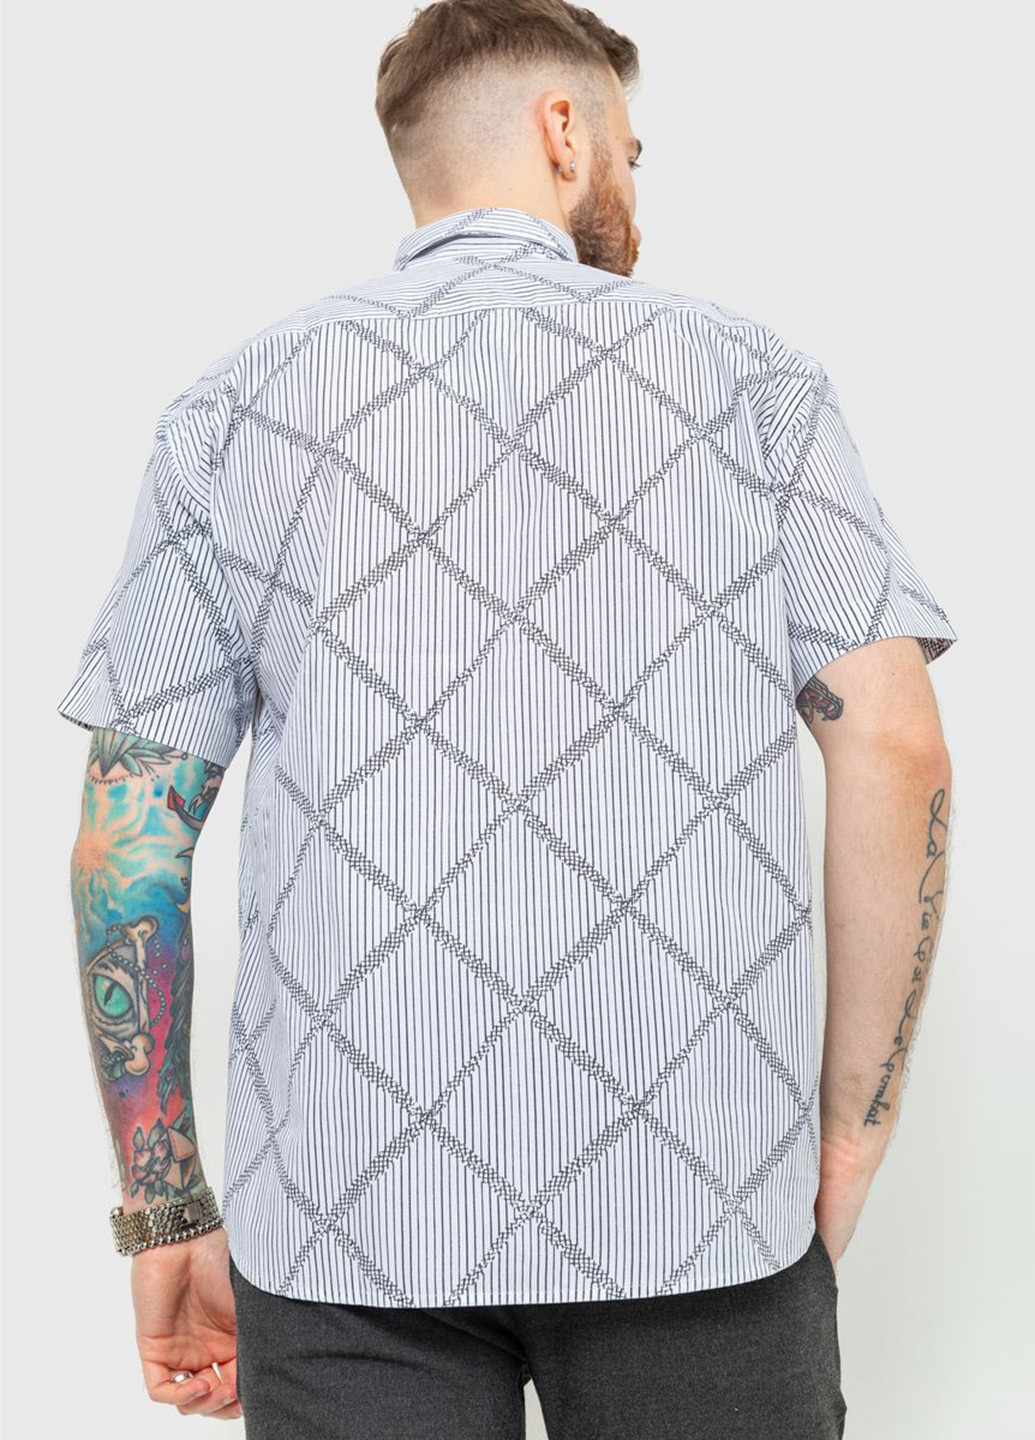 Белая кэжуал рубашка с геометрическим узором Ager